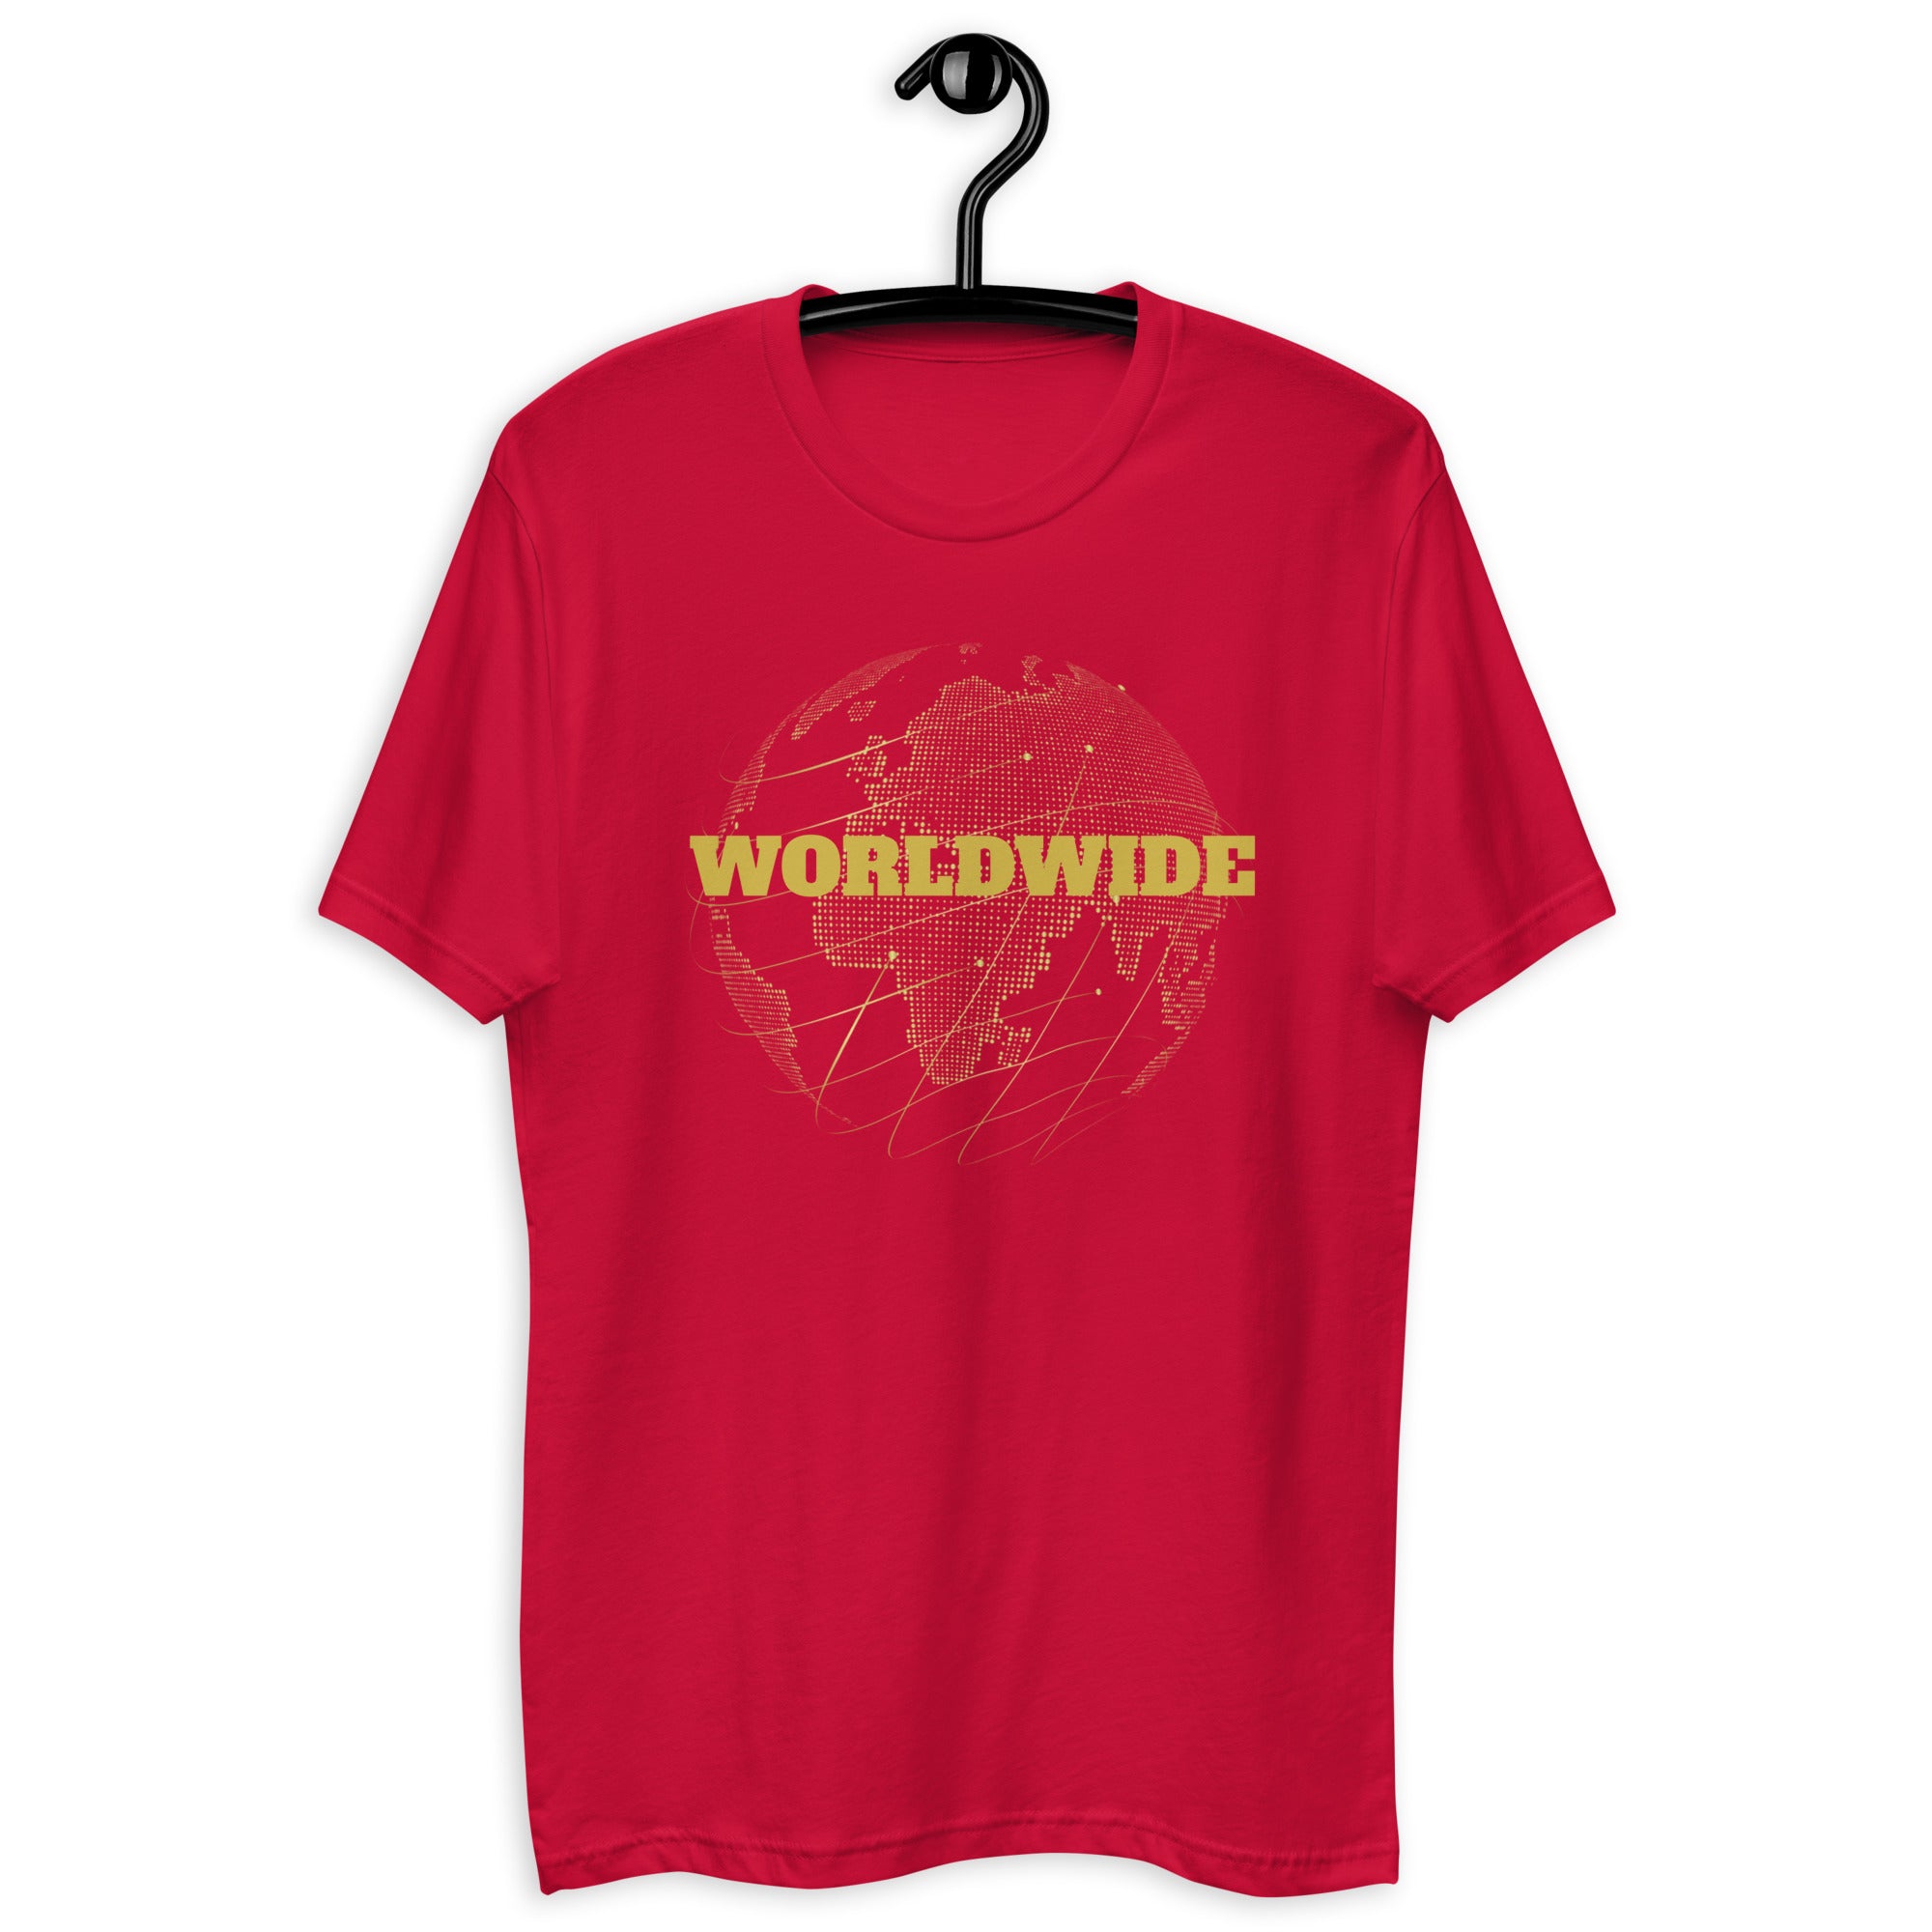 Globe Worldwide Short Sleeve T-shirt